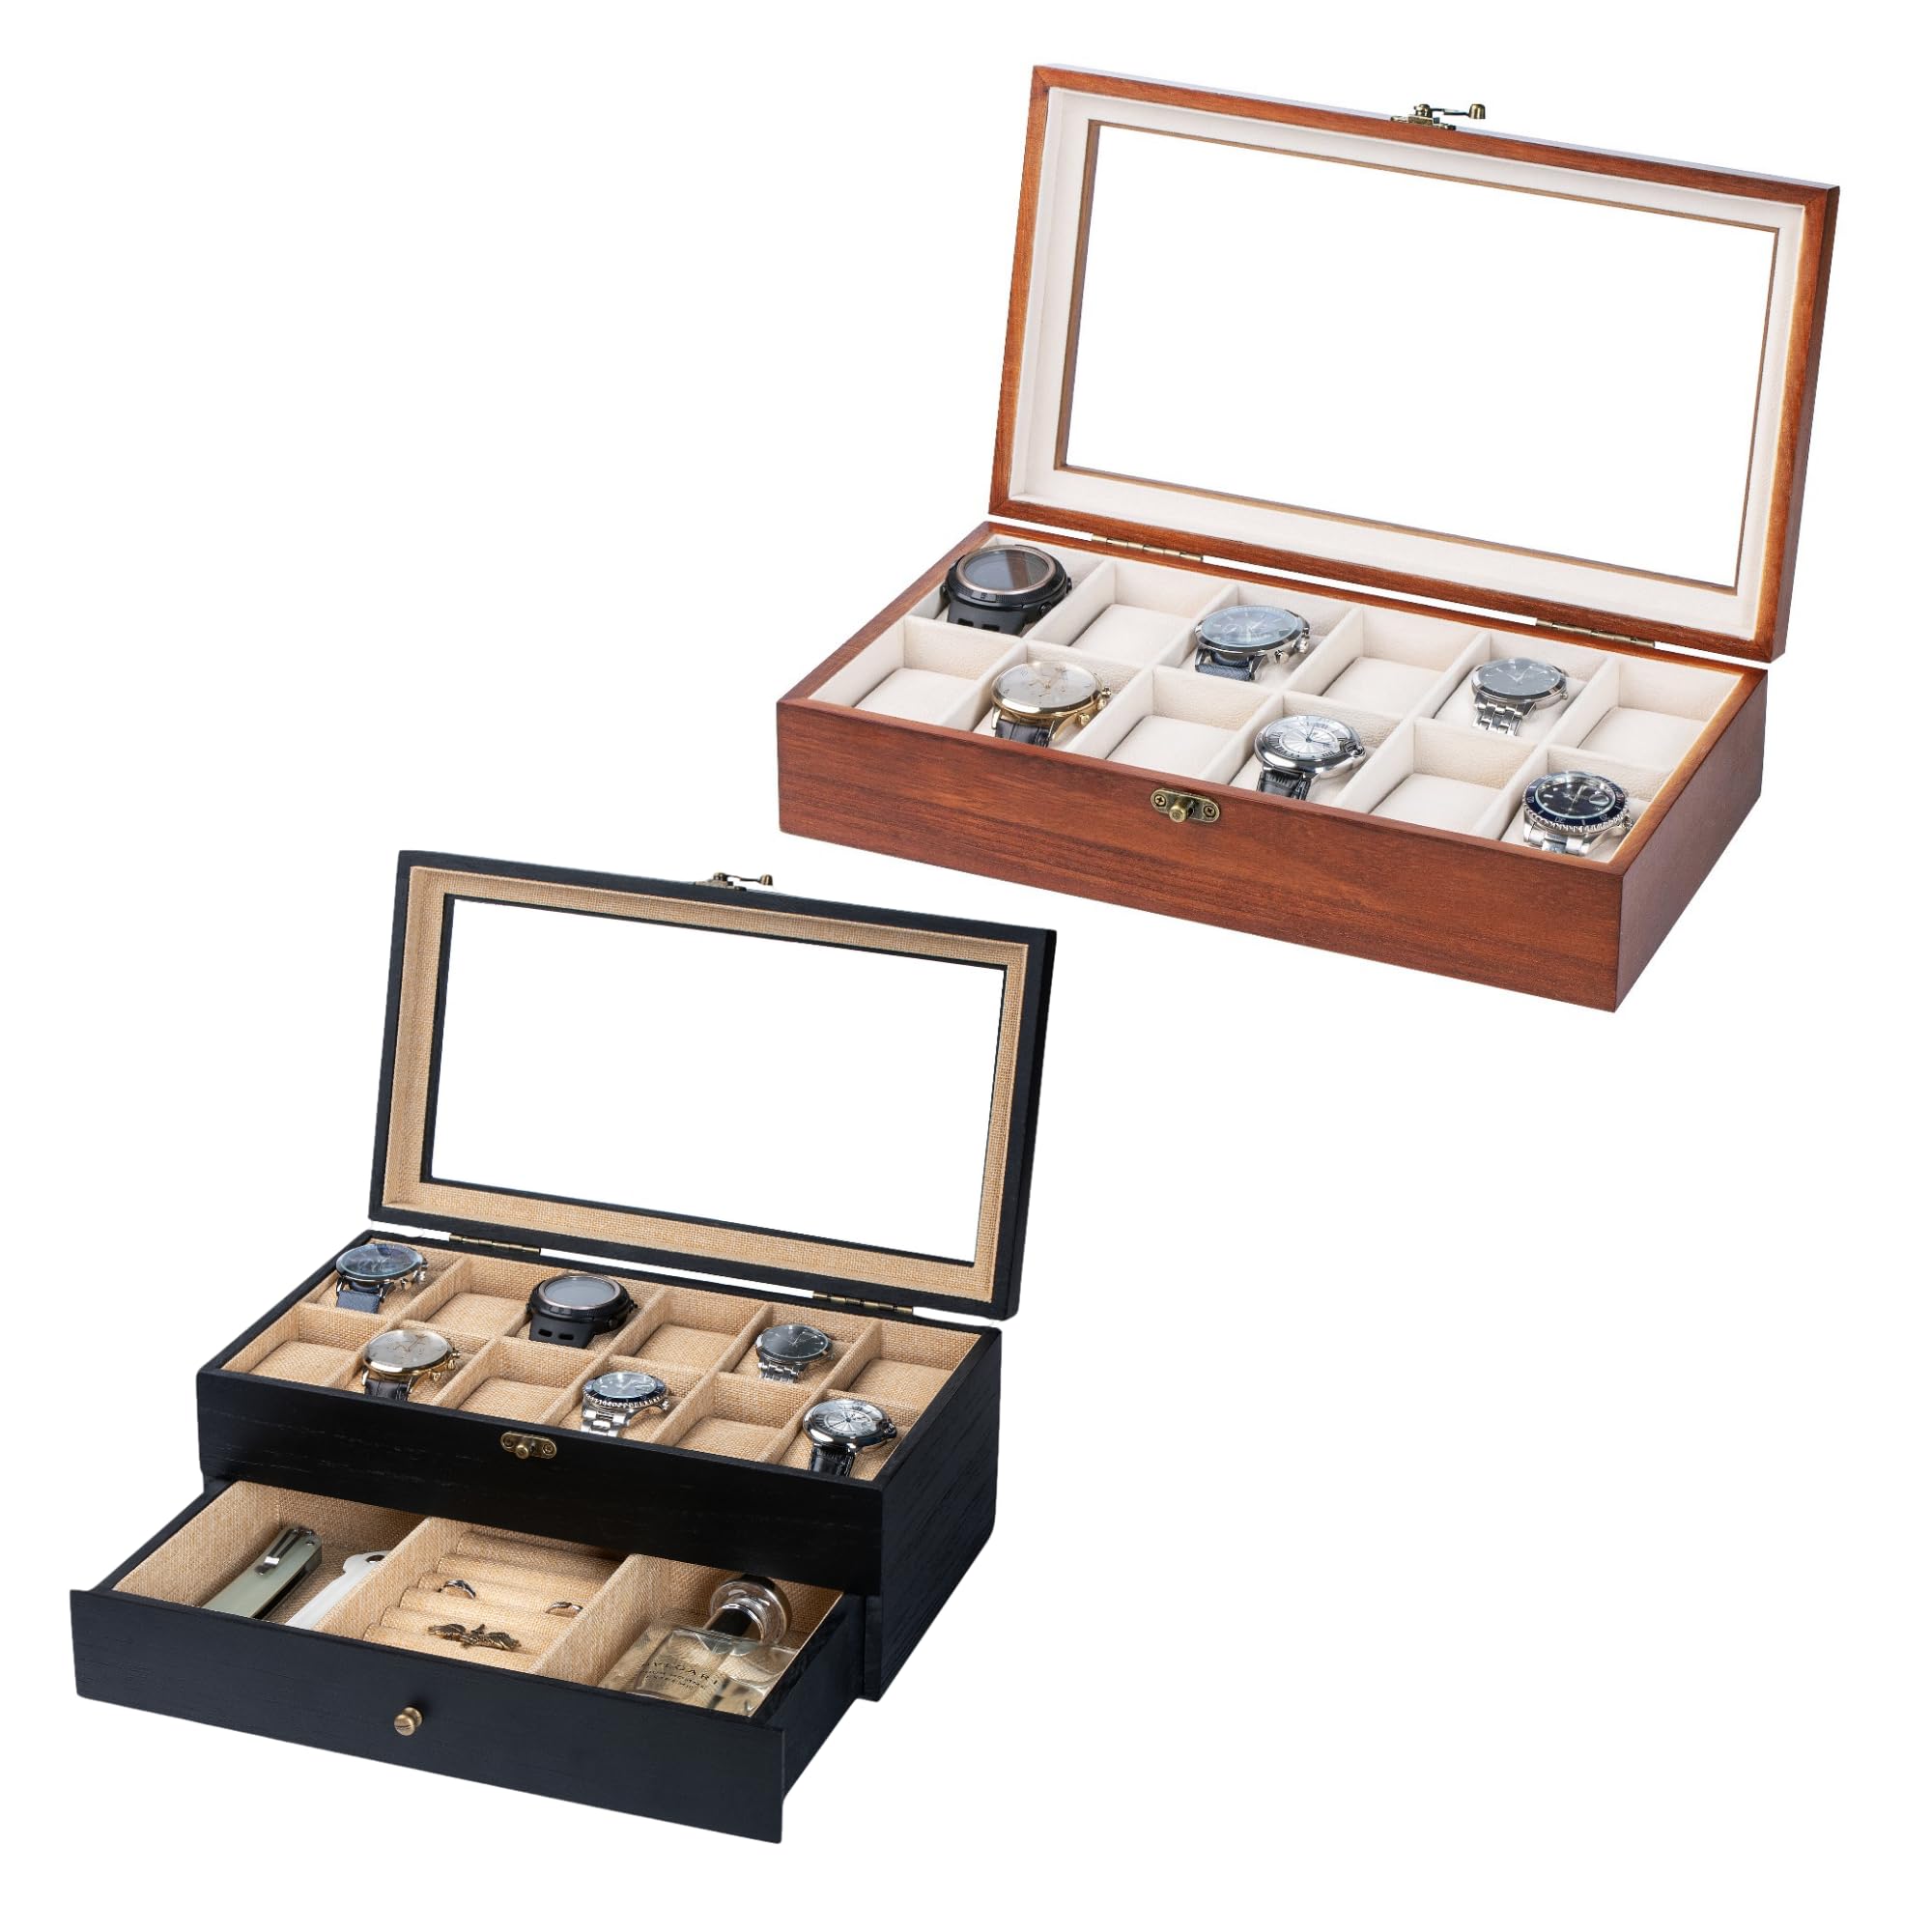 Exper City Watch Box Case Organizer Display Storage with Jewelry Drawer for Men Women Gift, Walnut Black 9B9G4T66 9B9LPBV9